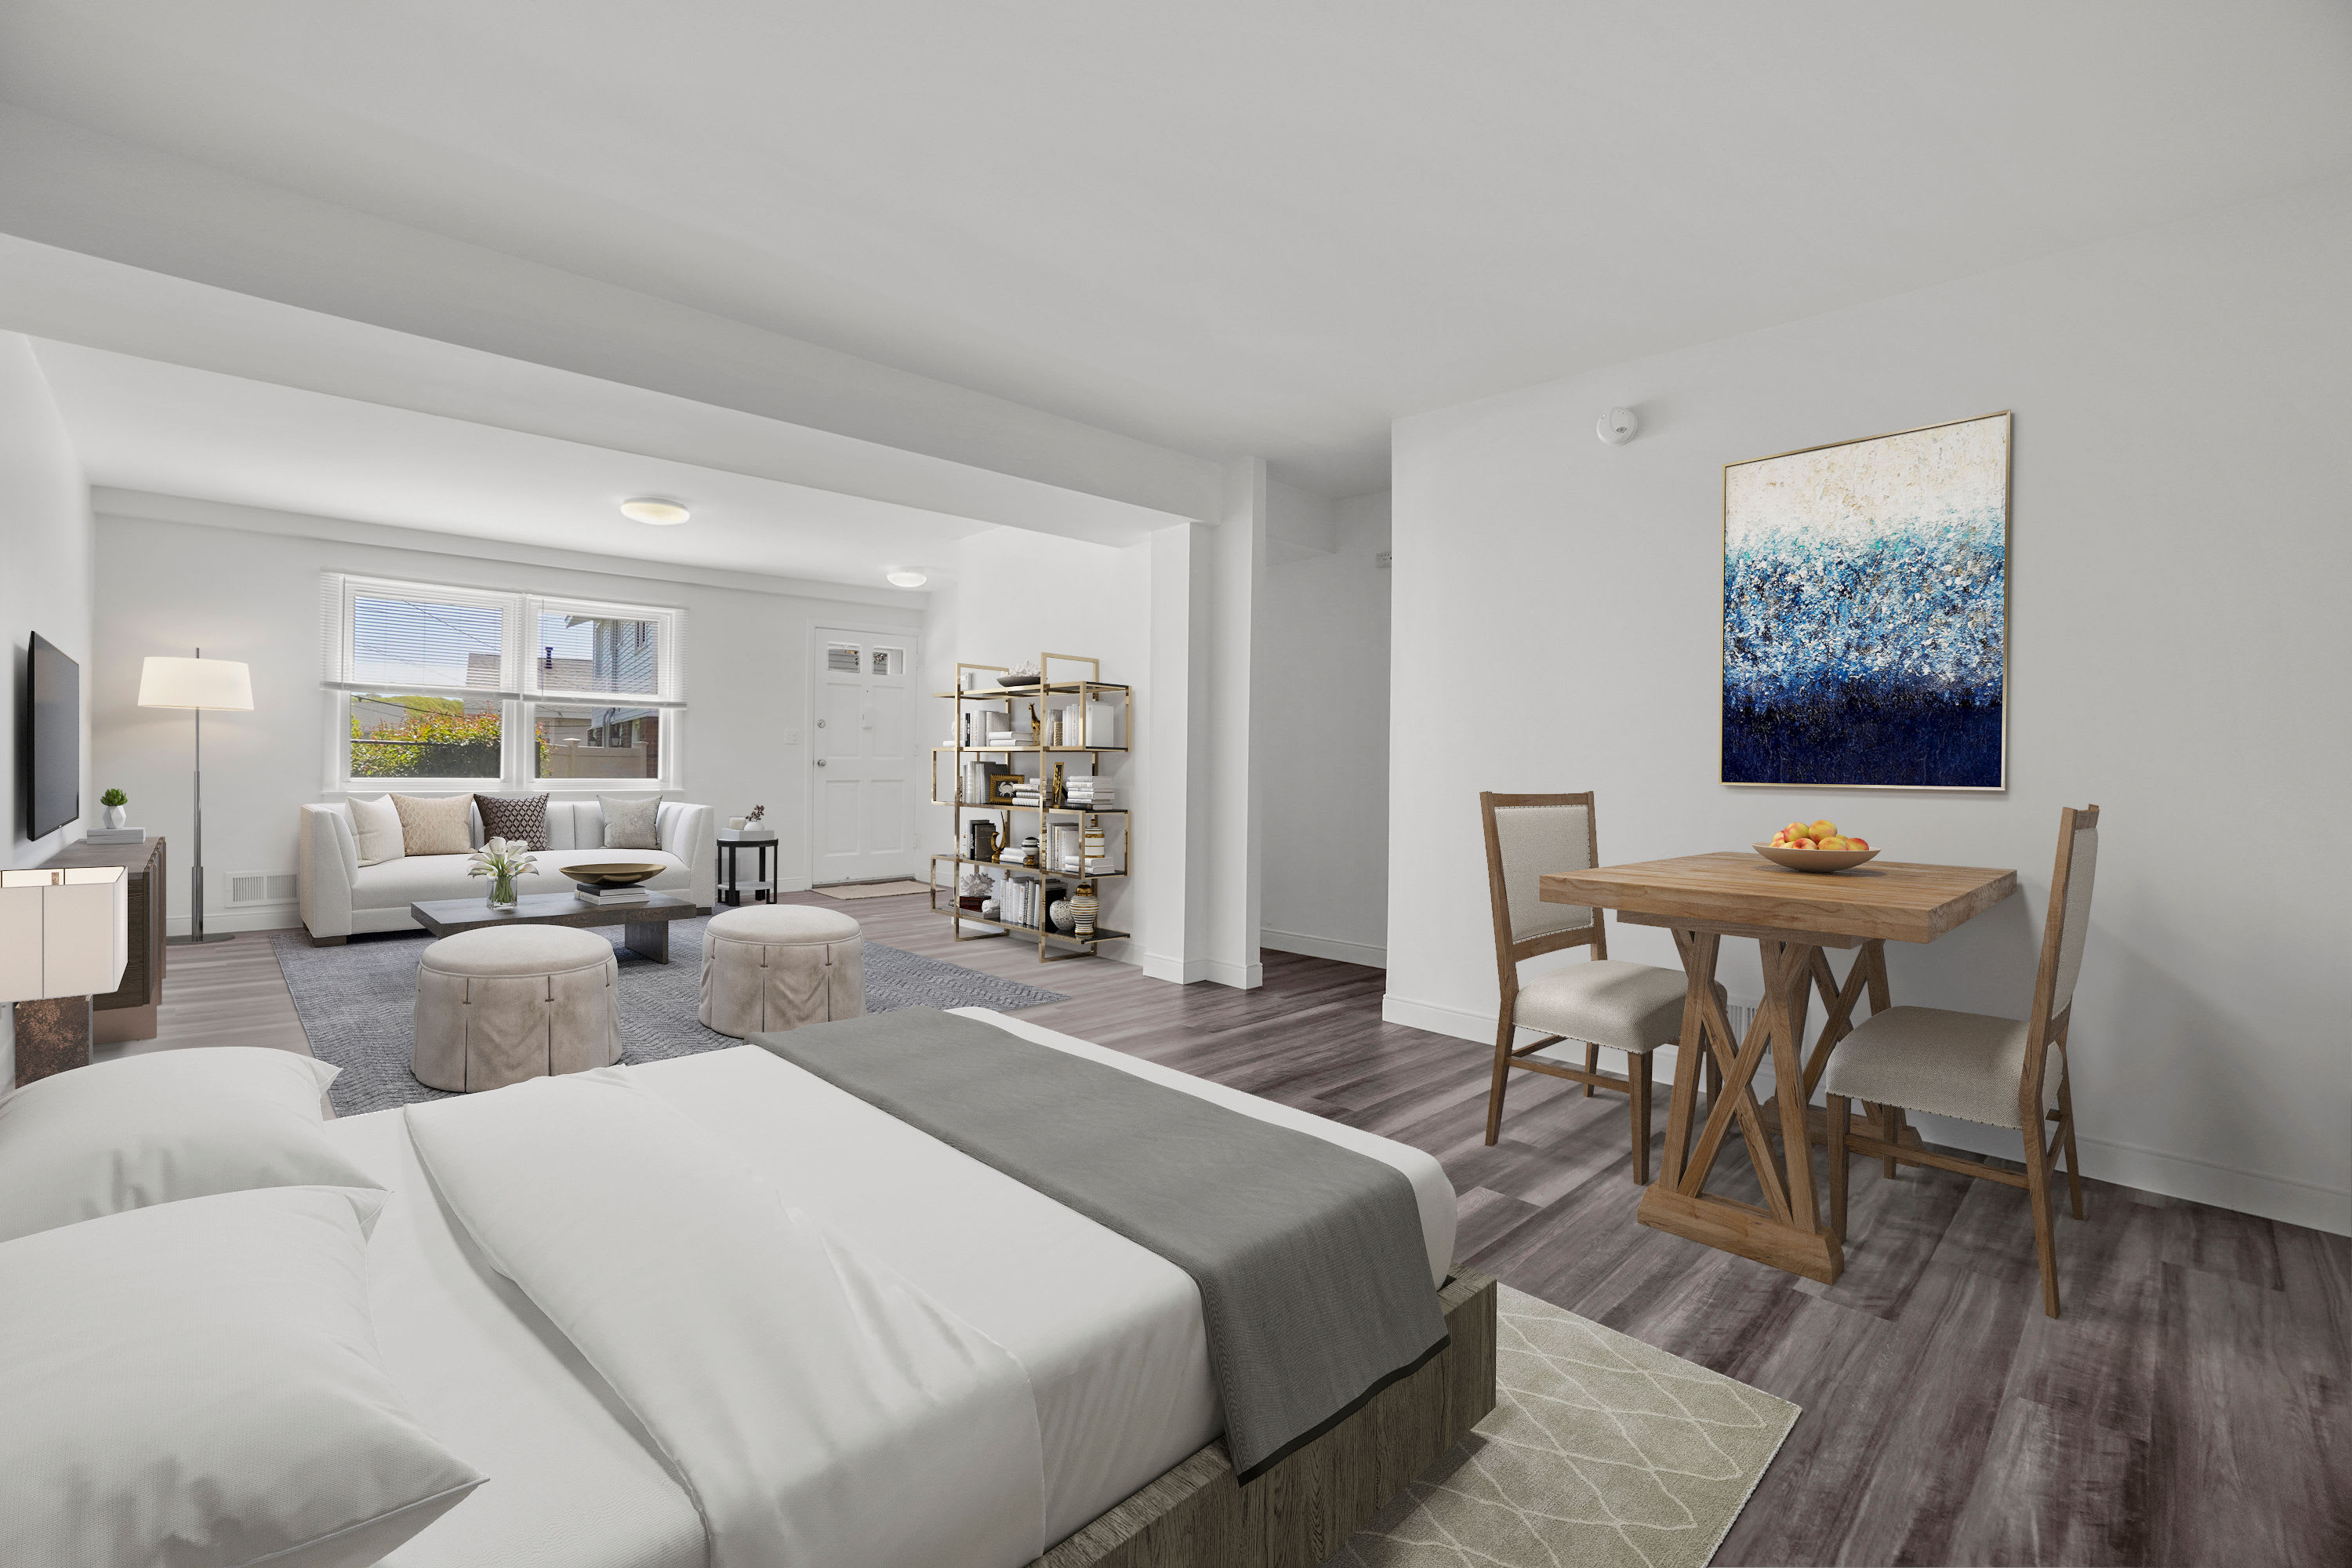 Enjoy a Luxury Living Room at Stony Brook Commons"